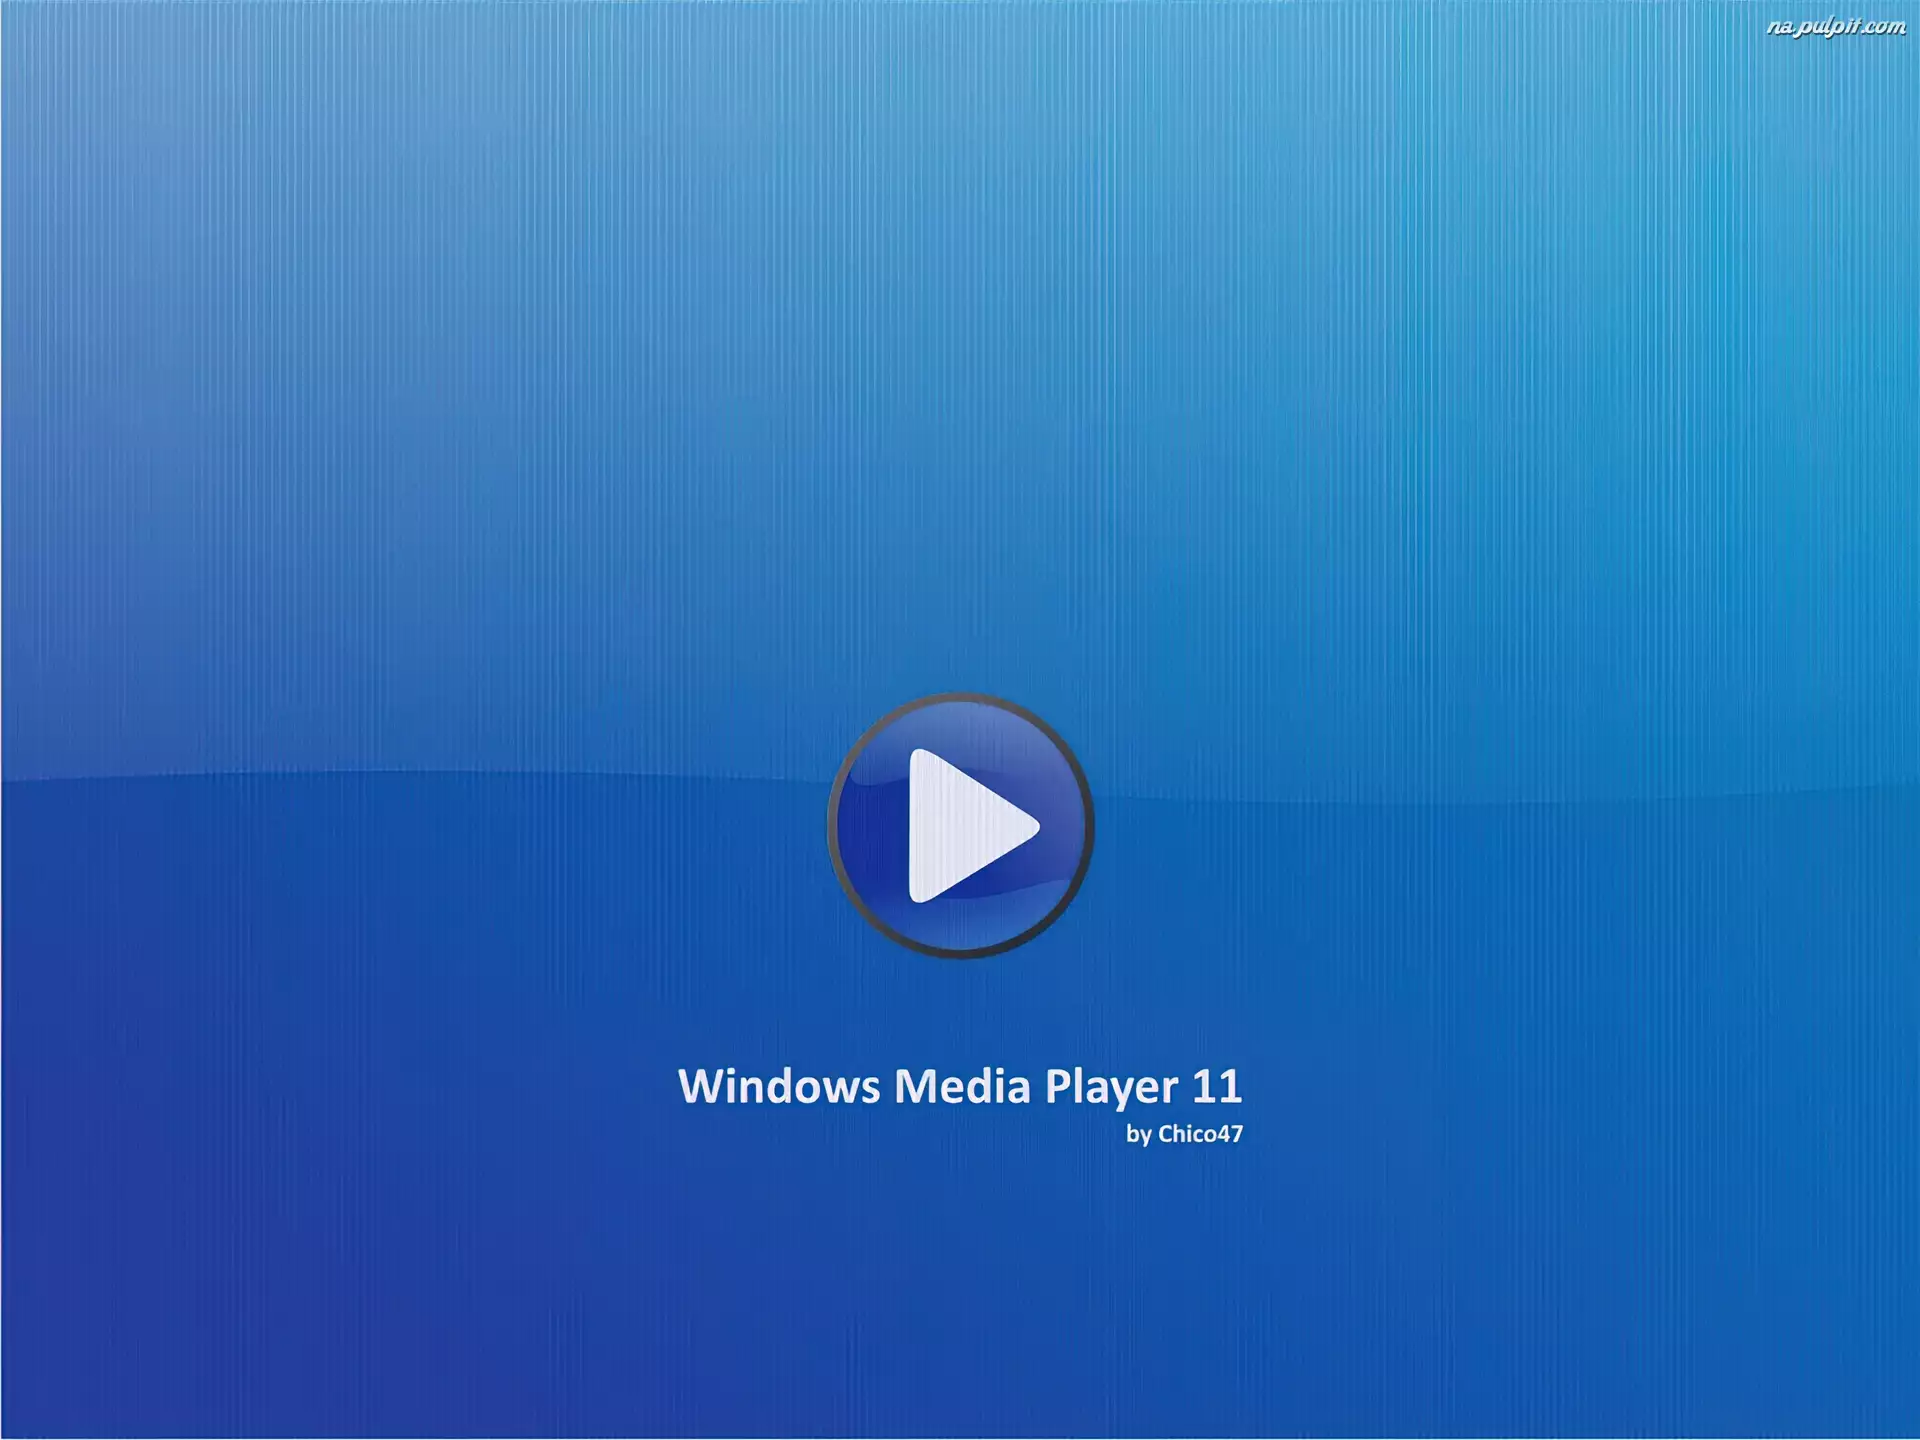 Media Player 11, Windows